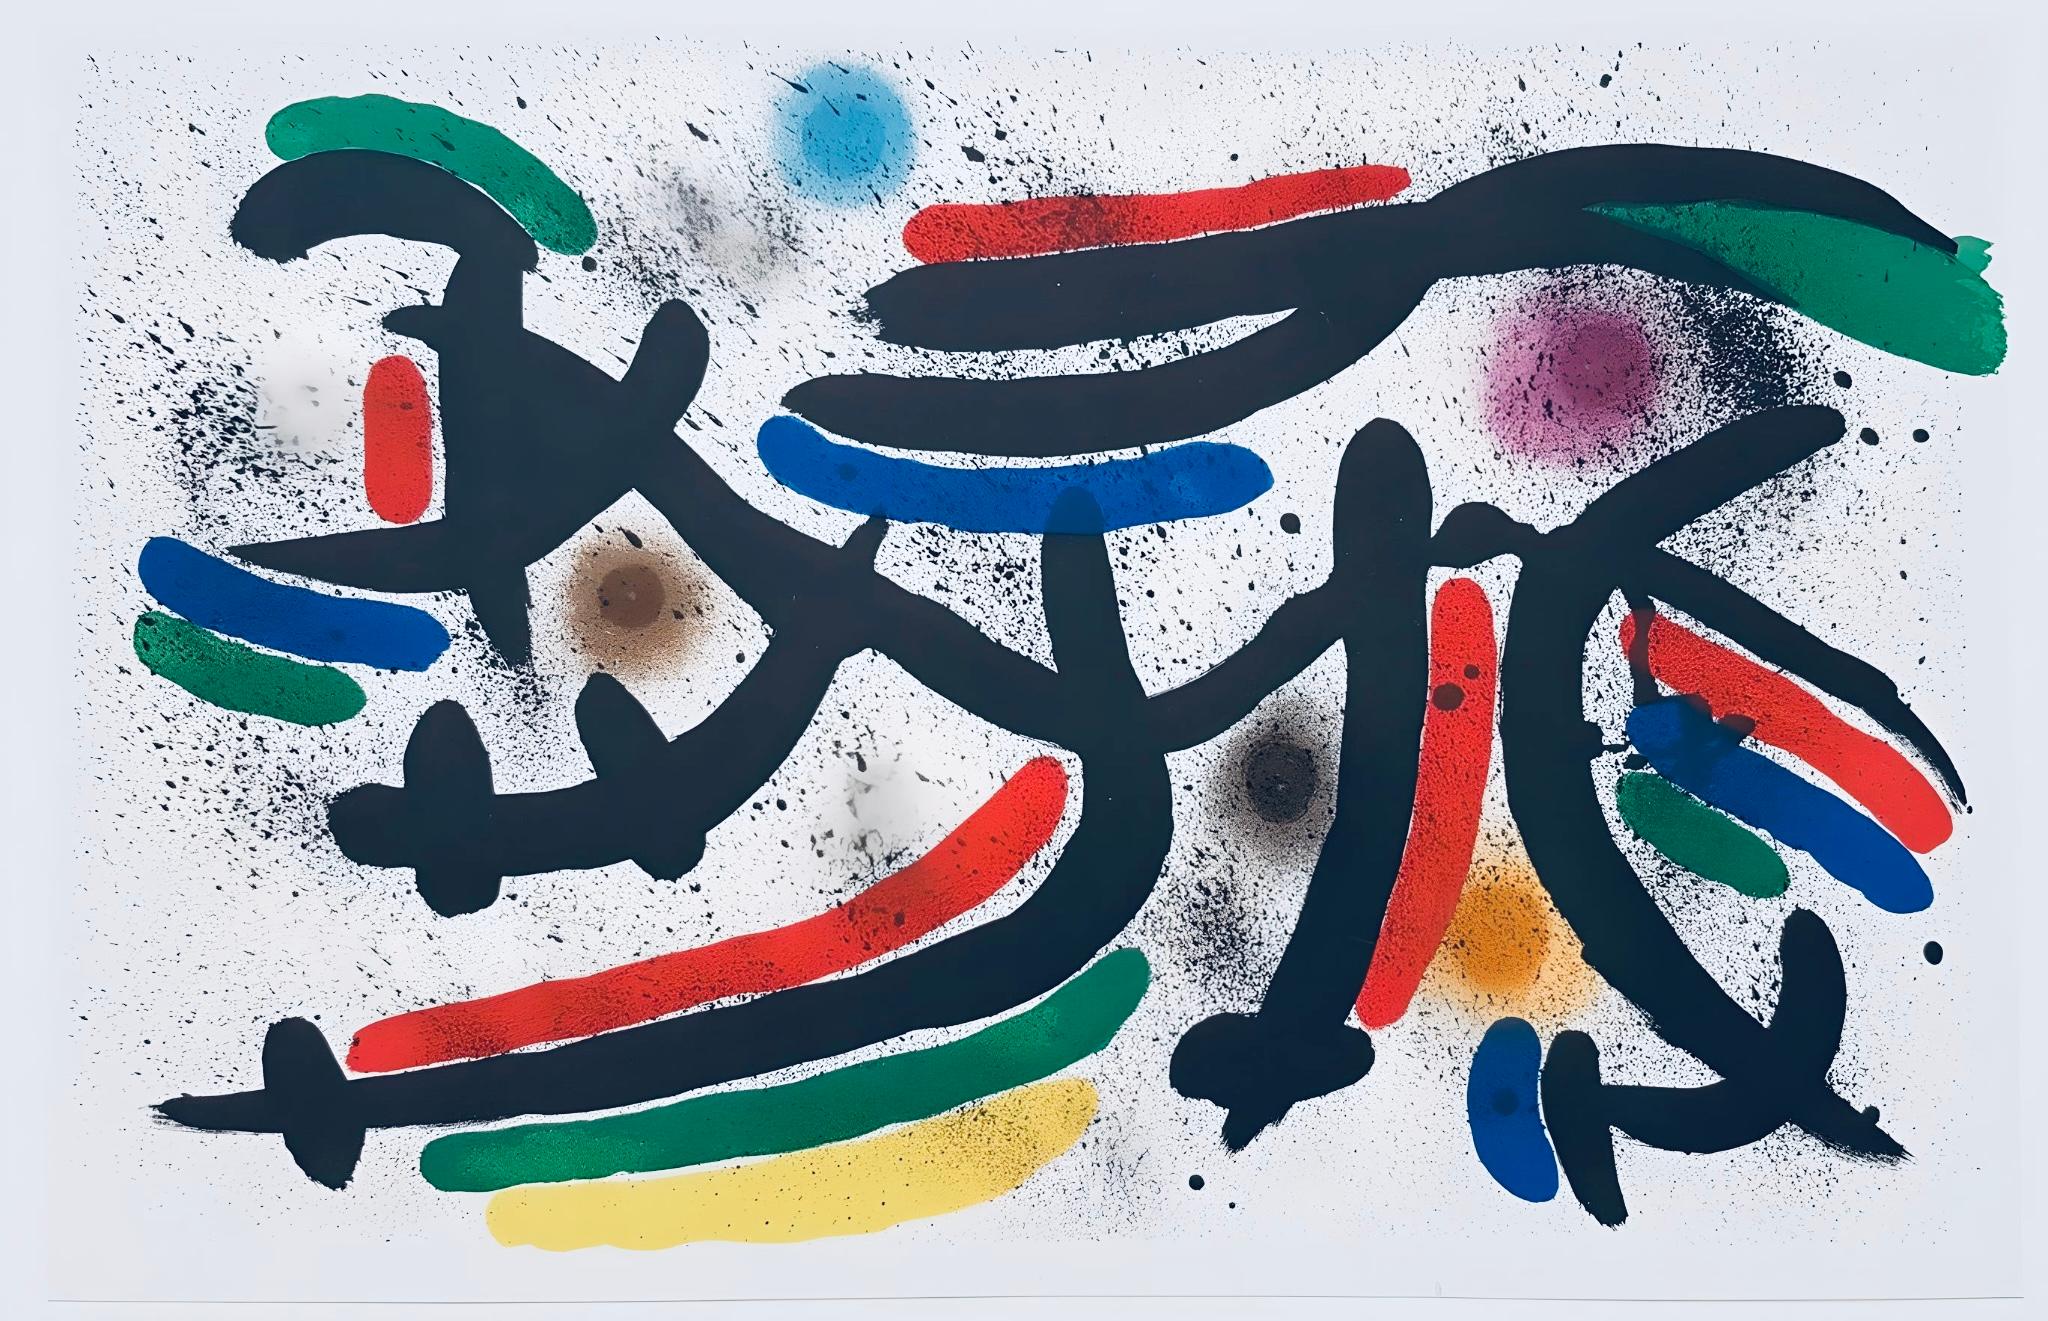 Joan Miró Abstract Print - Miro, Composition (Cramer 160; Mourlot 865), 1972 (after)